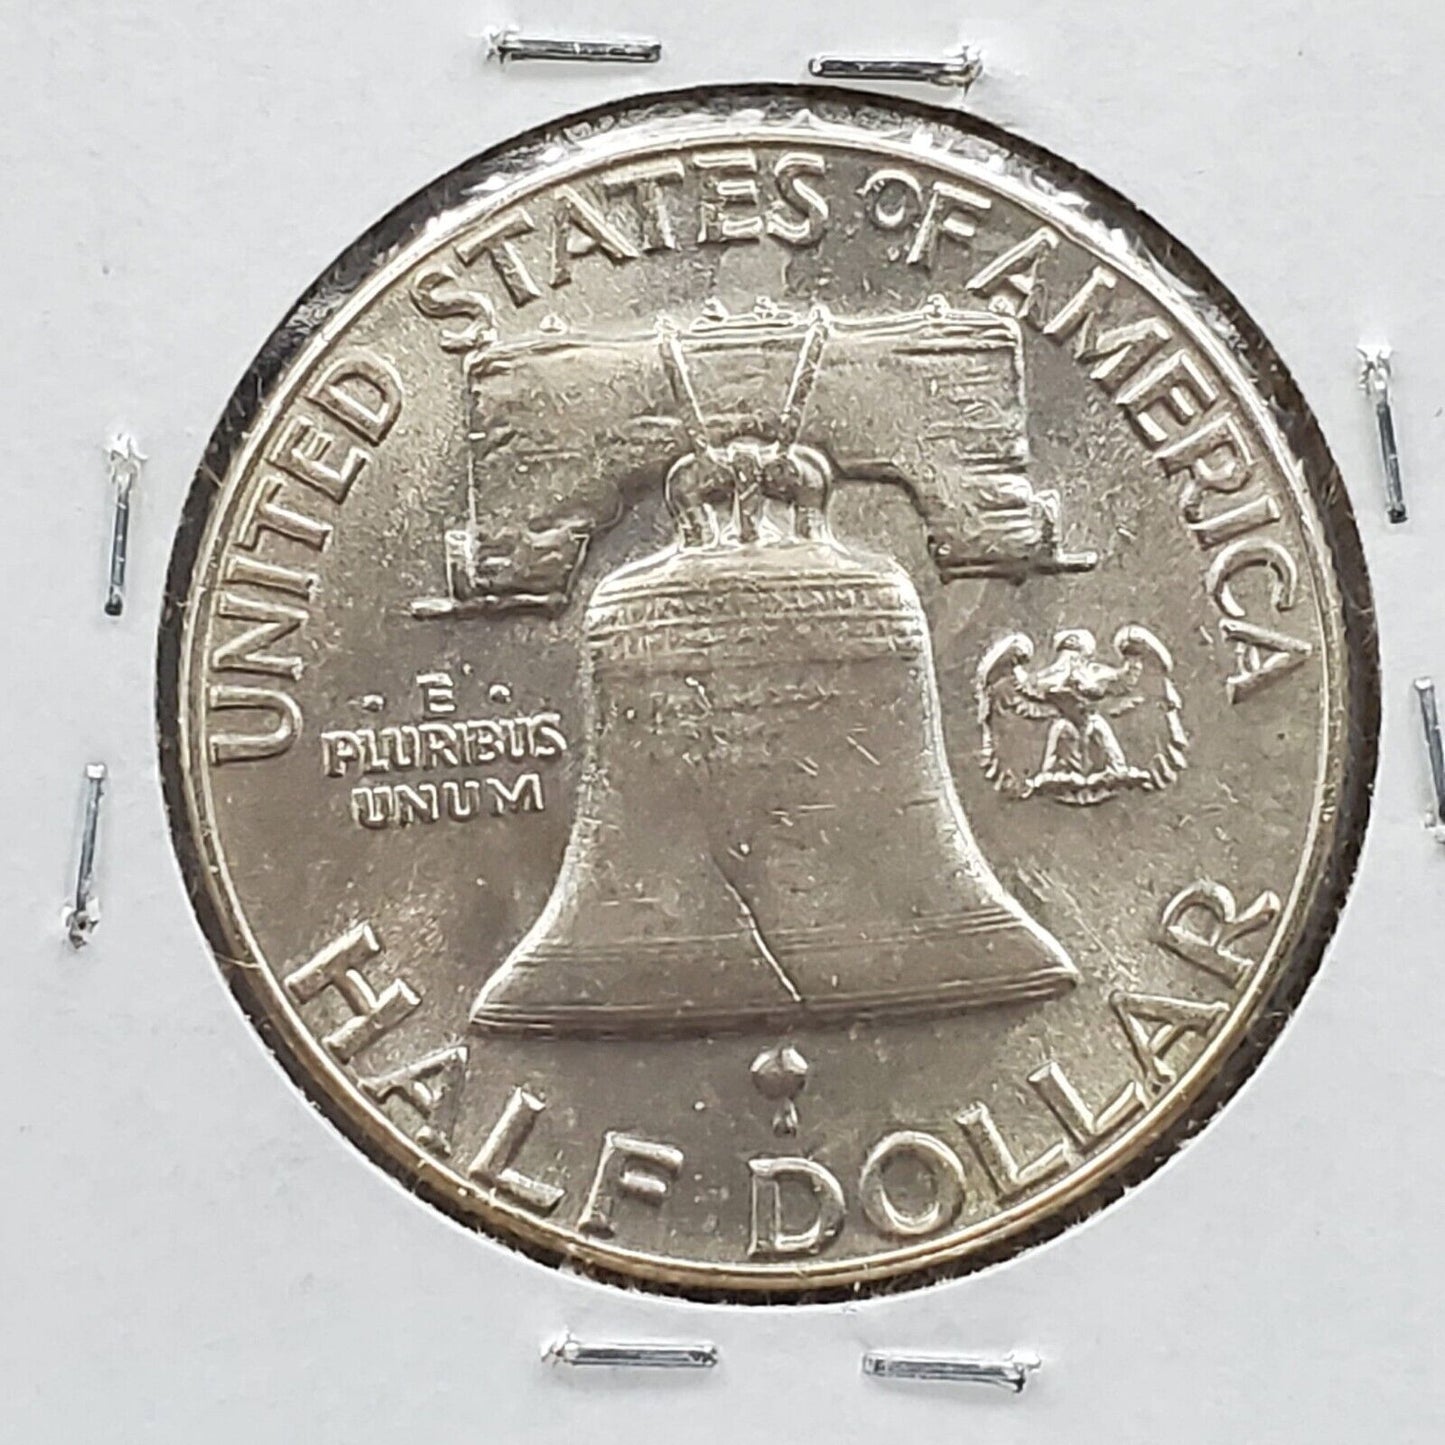 1954 P Franklin Silver 90% Half Dollar Coin Choice BU Uncirculated New Condition